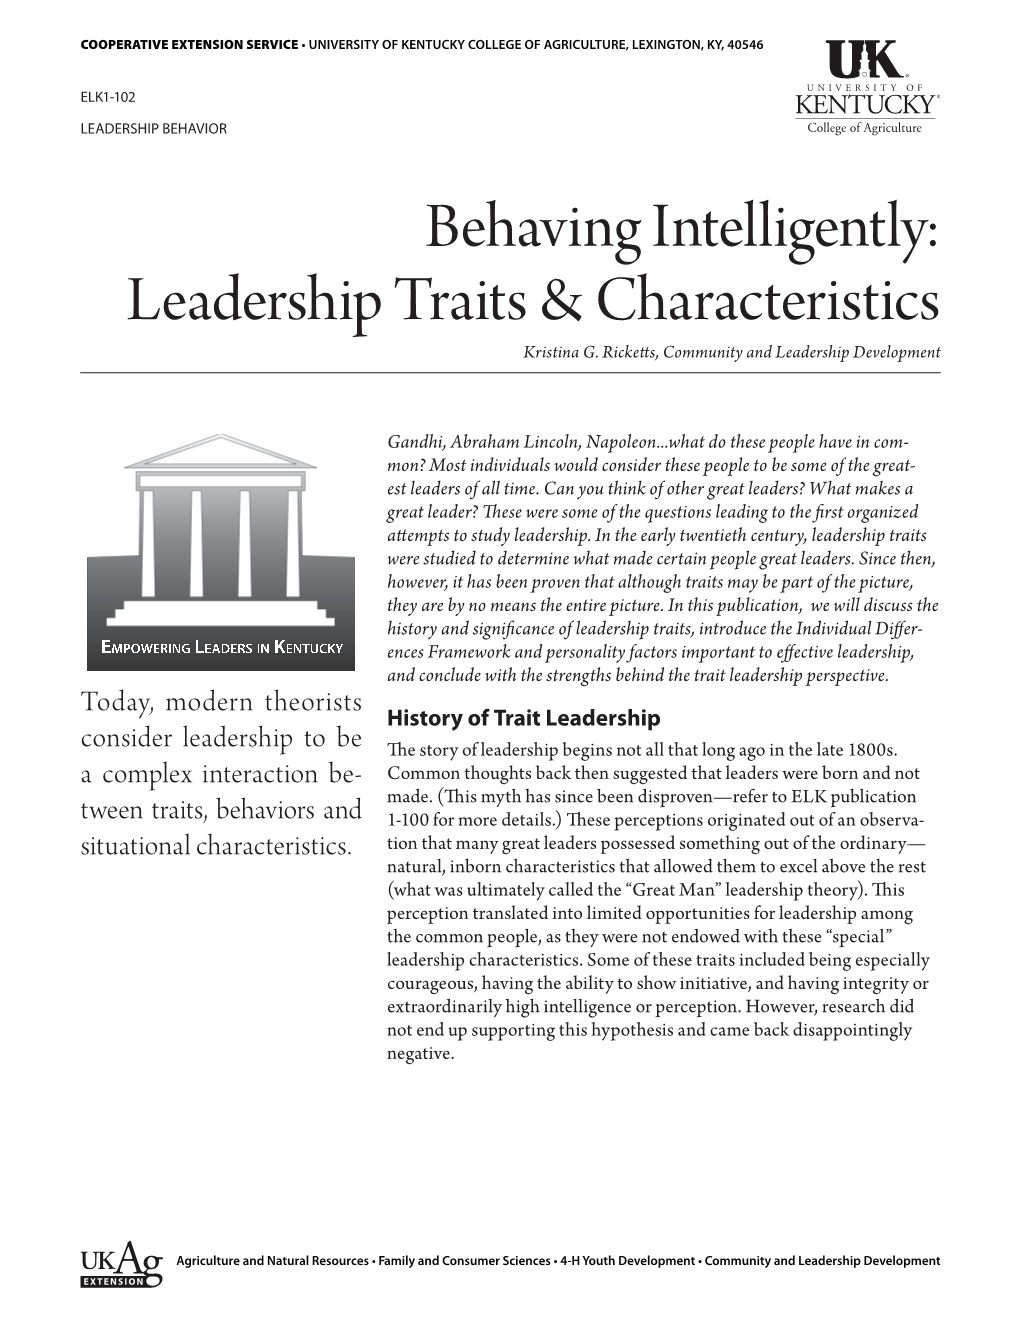 Leadership Traits & Characteristics